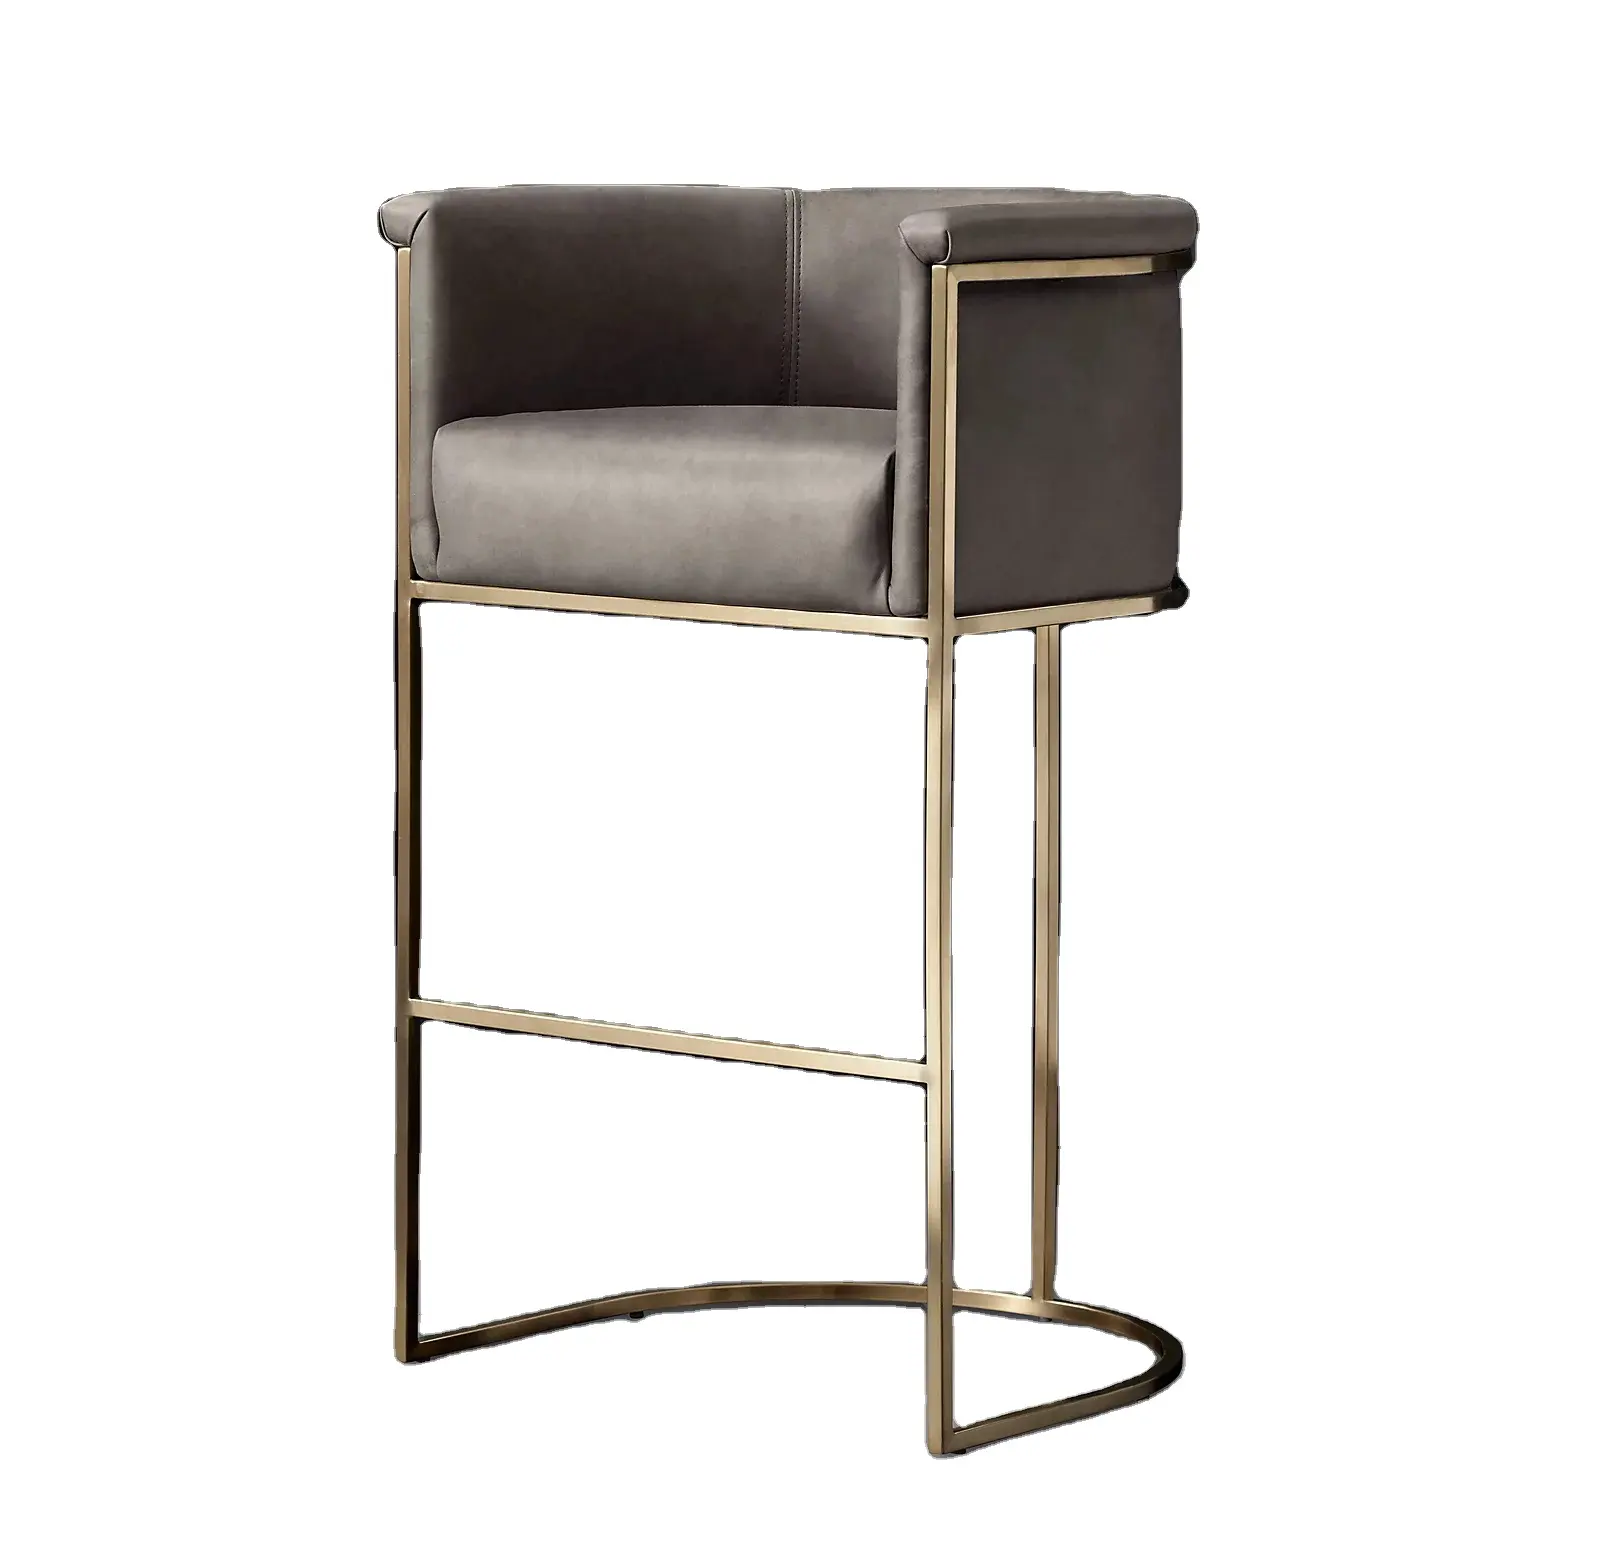 Barrelback luxury gold metal high bar counter stools chair modern stainless bar stools for kitchen Restaurant bar